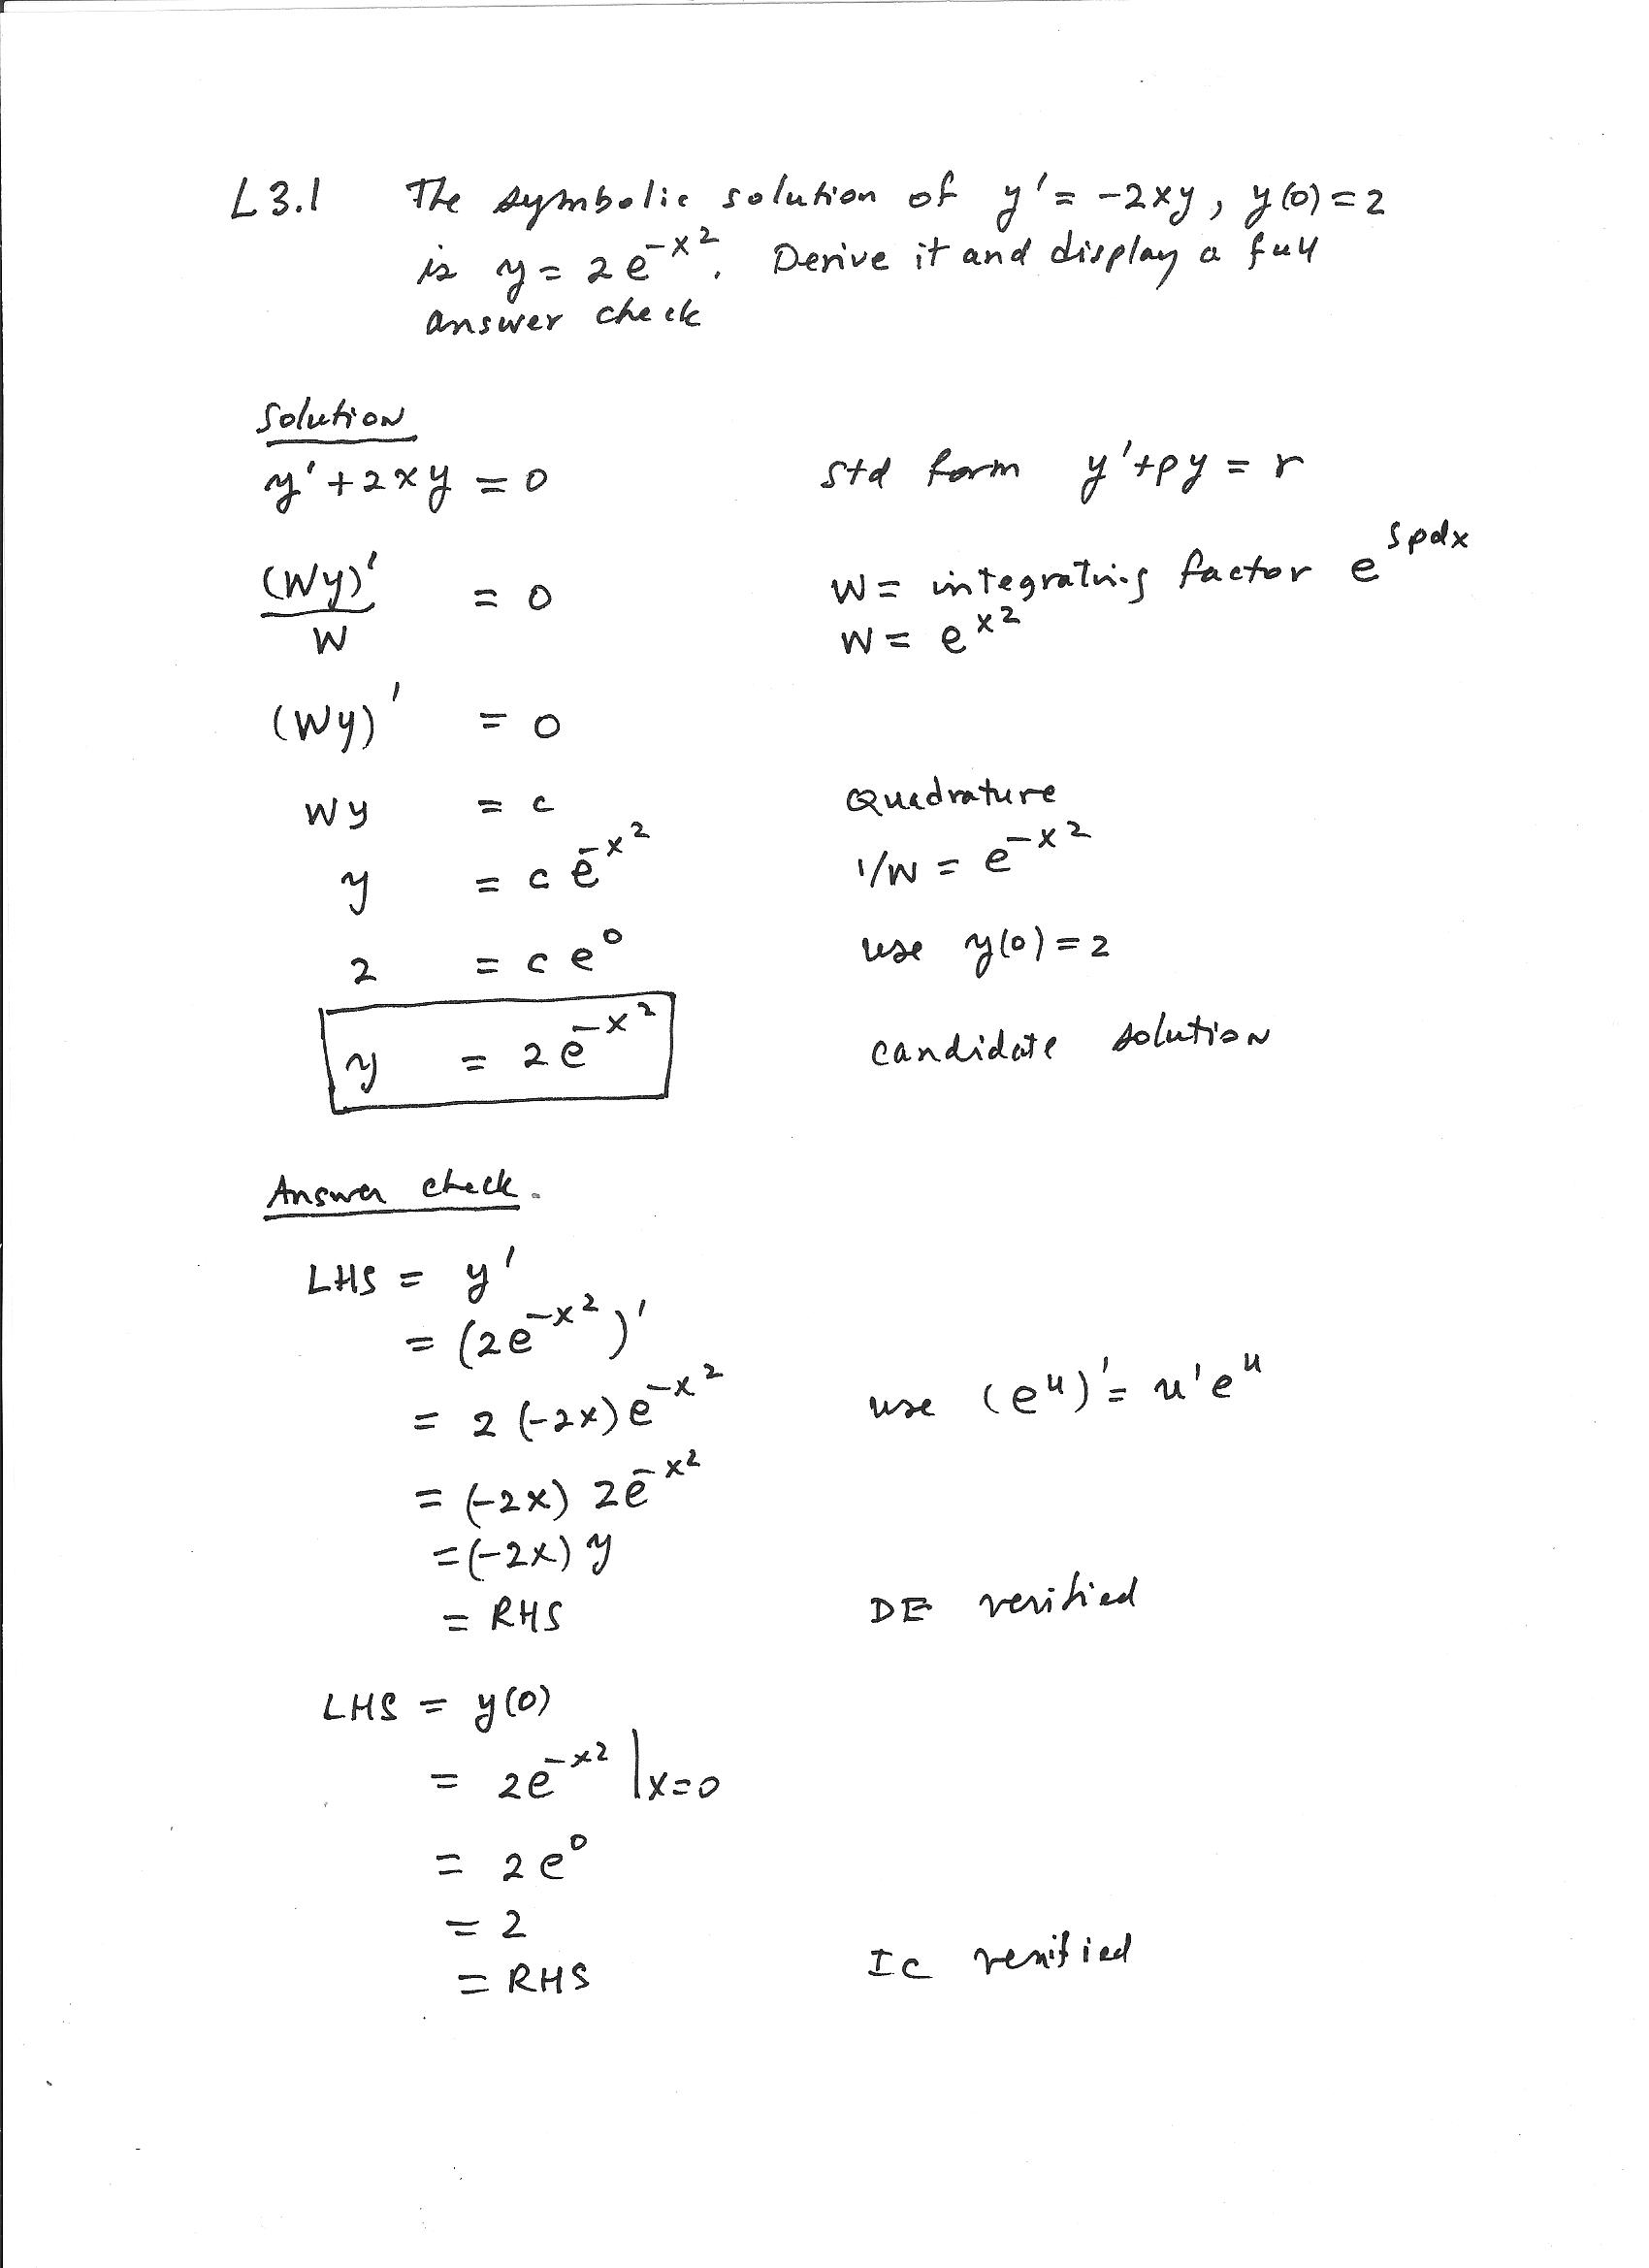 Writing Linear Equations Worksheet Answer Key Image